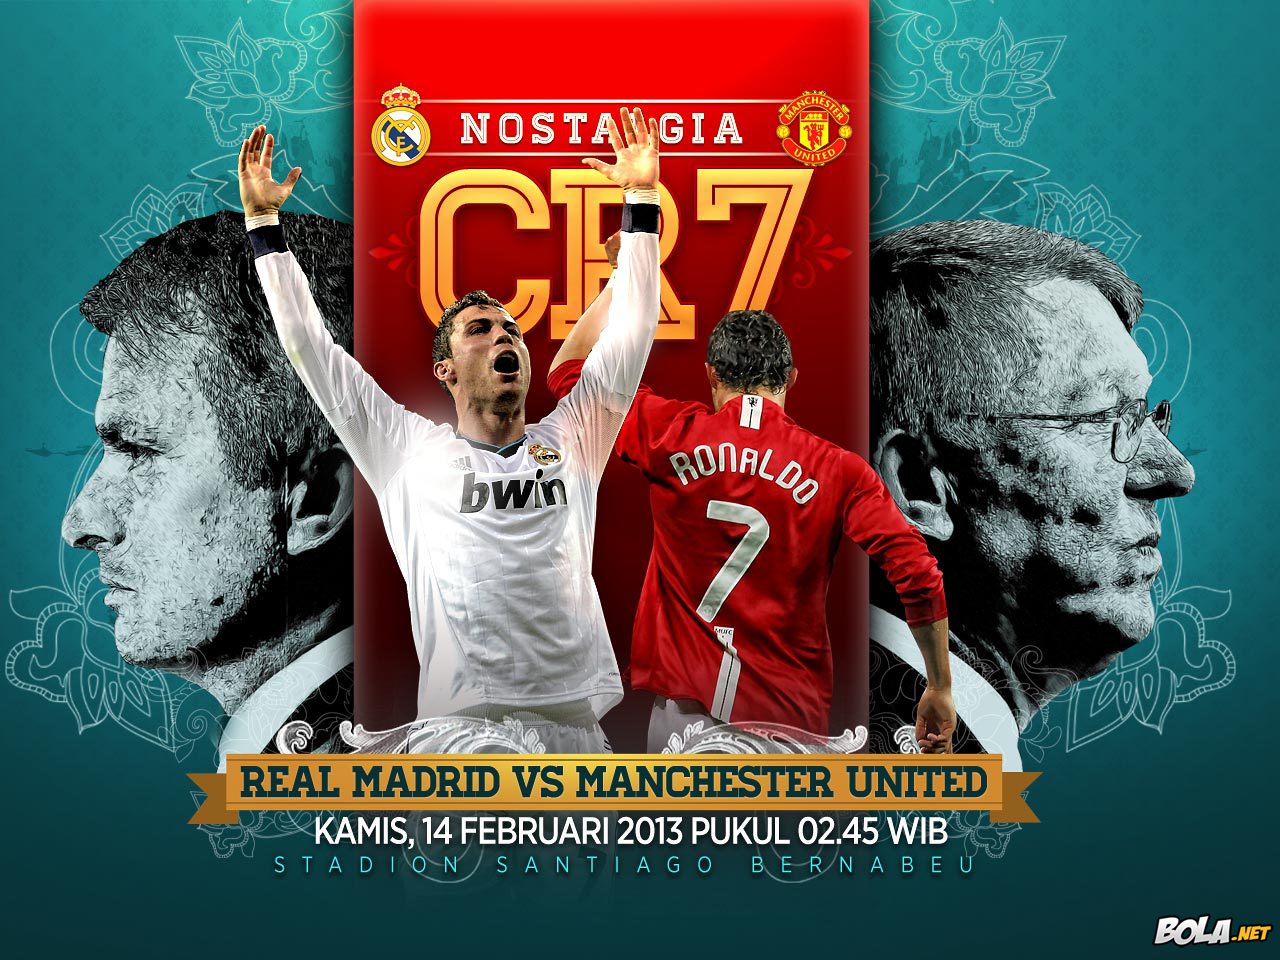 Download Wallpaper Real Madrid V Manchester United Bolanet